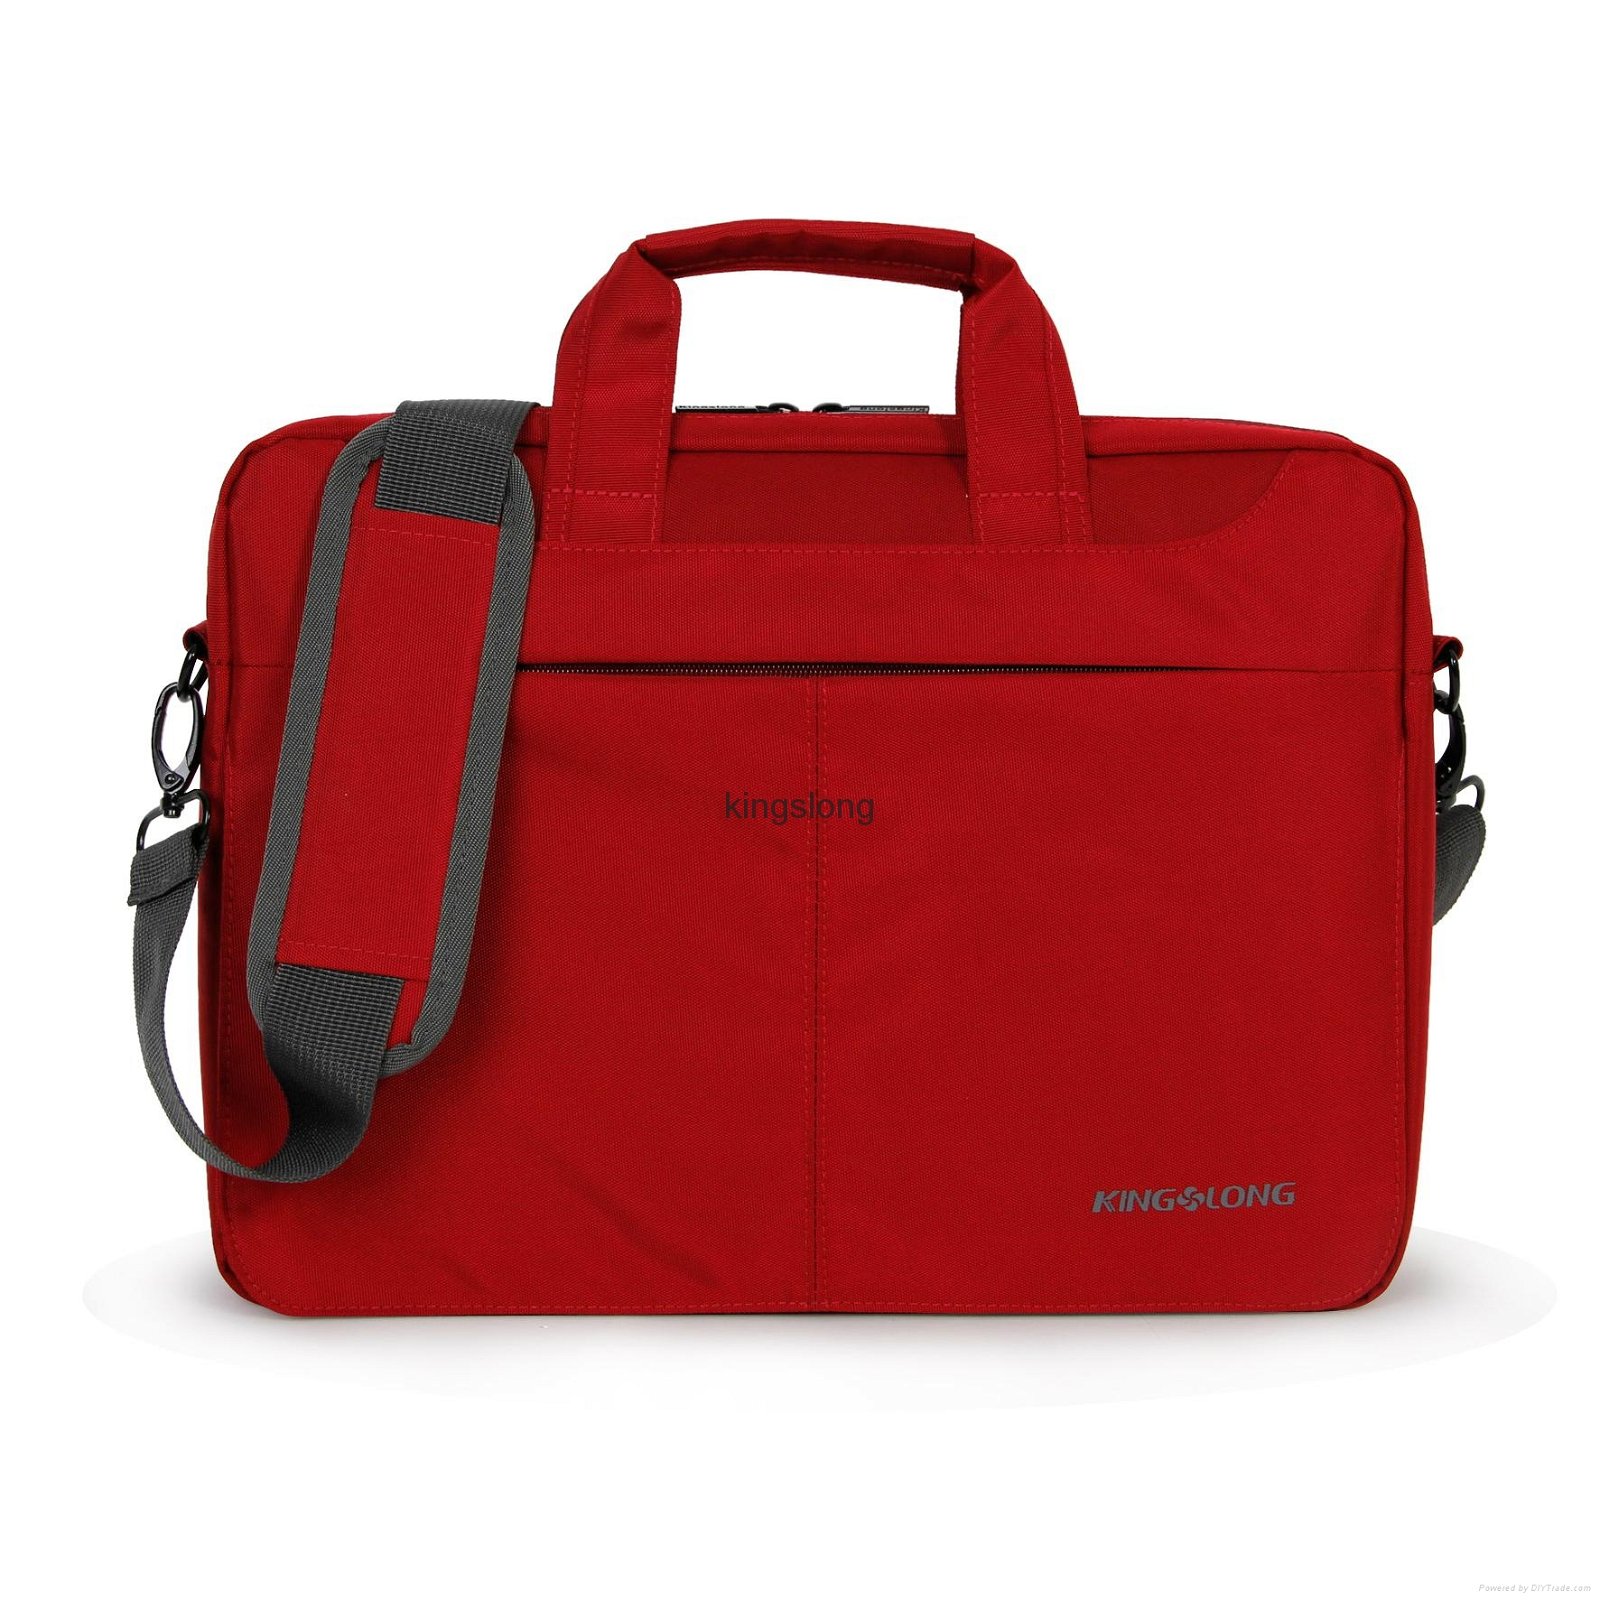 Kingslong women laptop briefcase red 